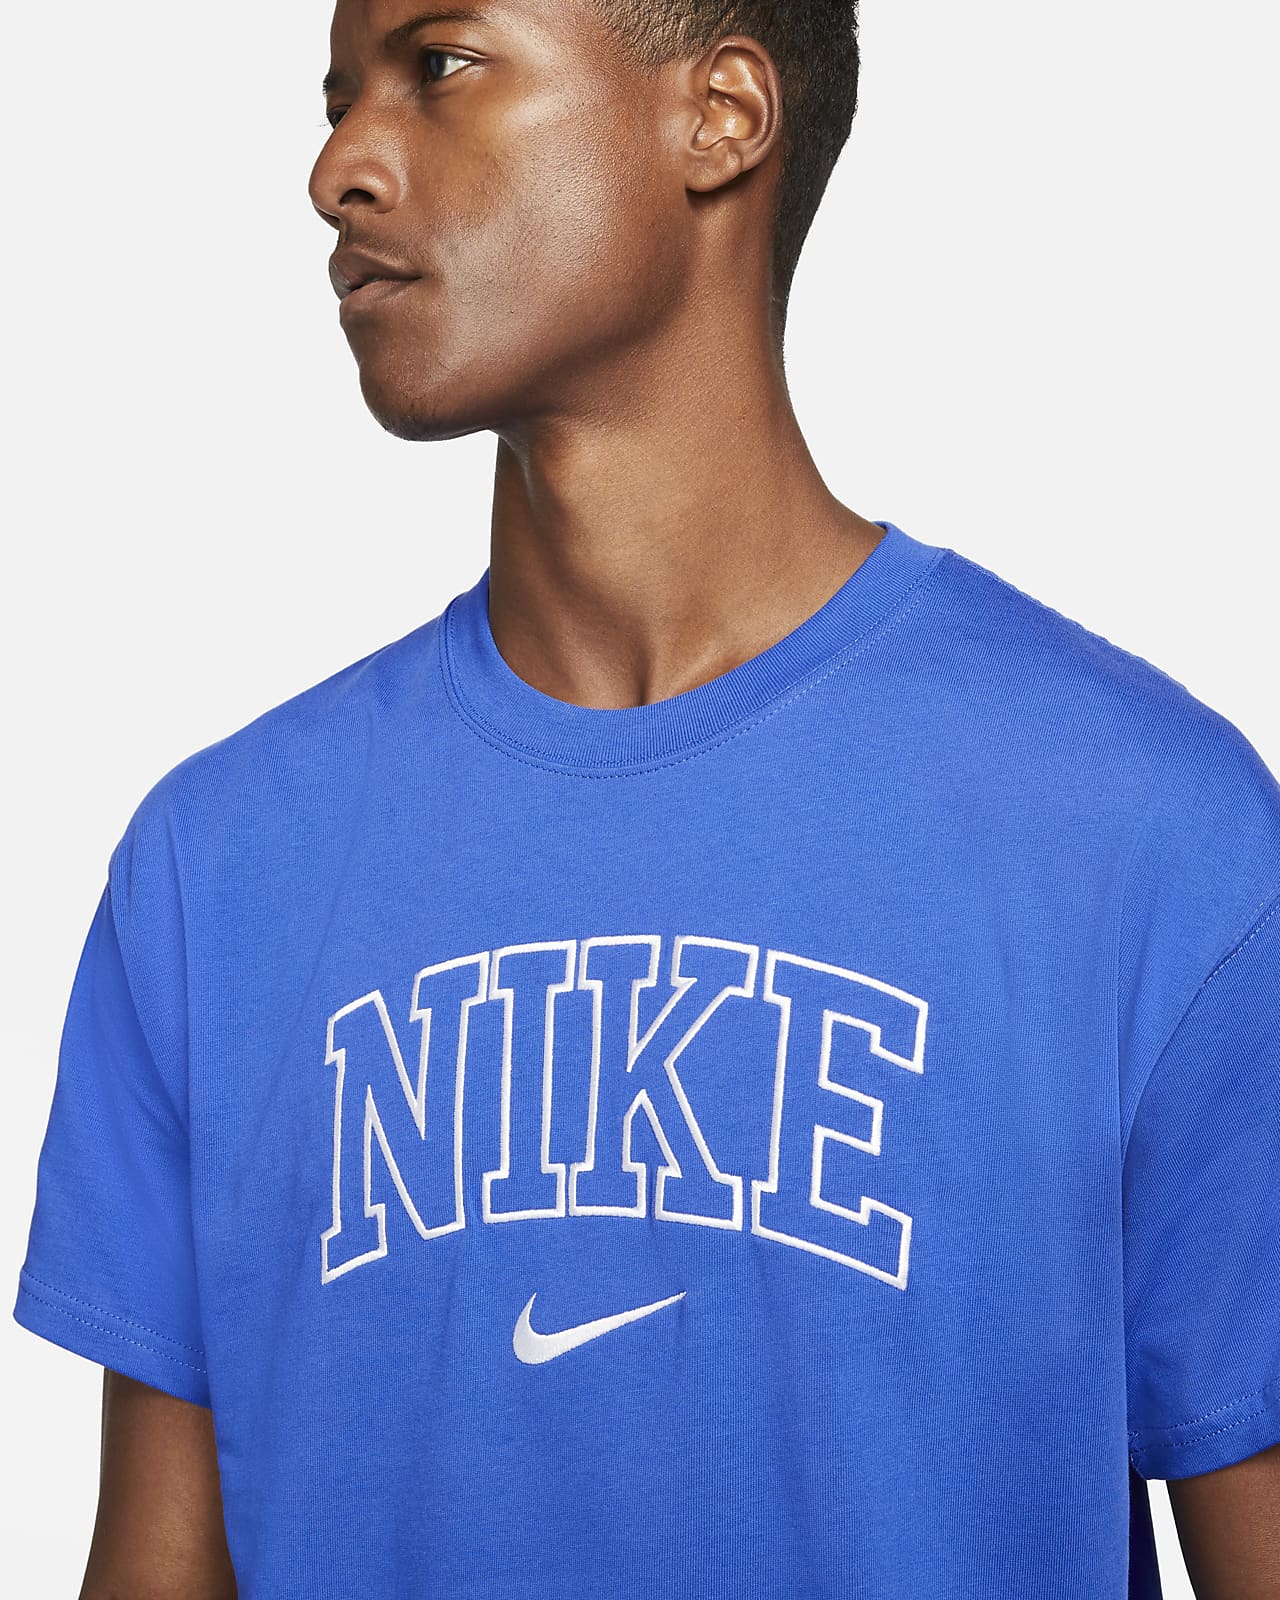 Buy > royal blue t shirt nike > in stock